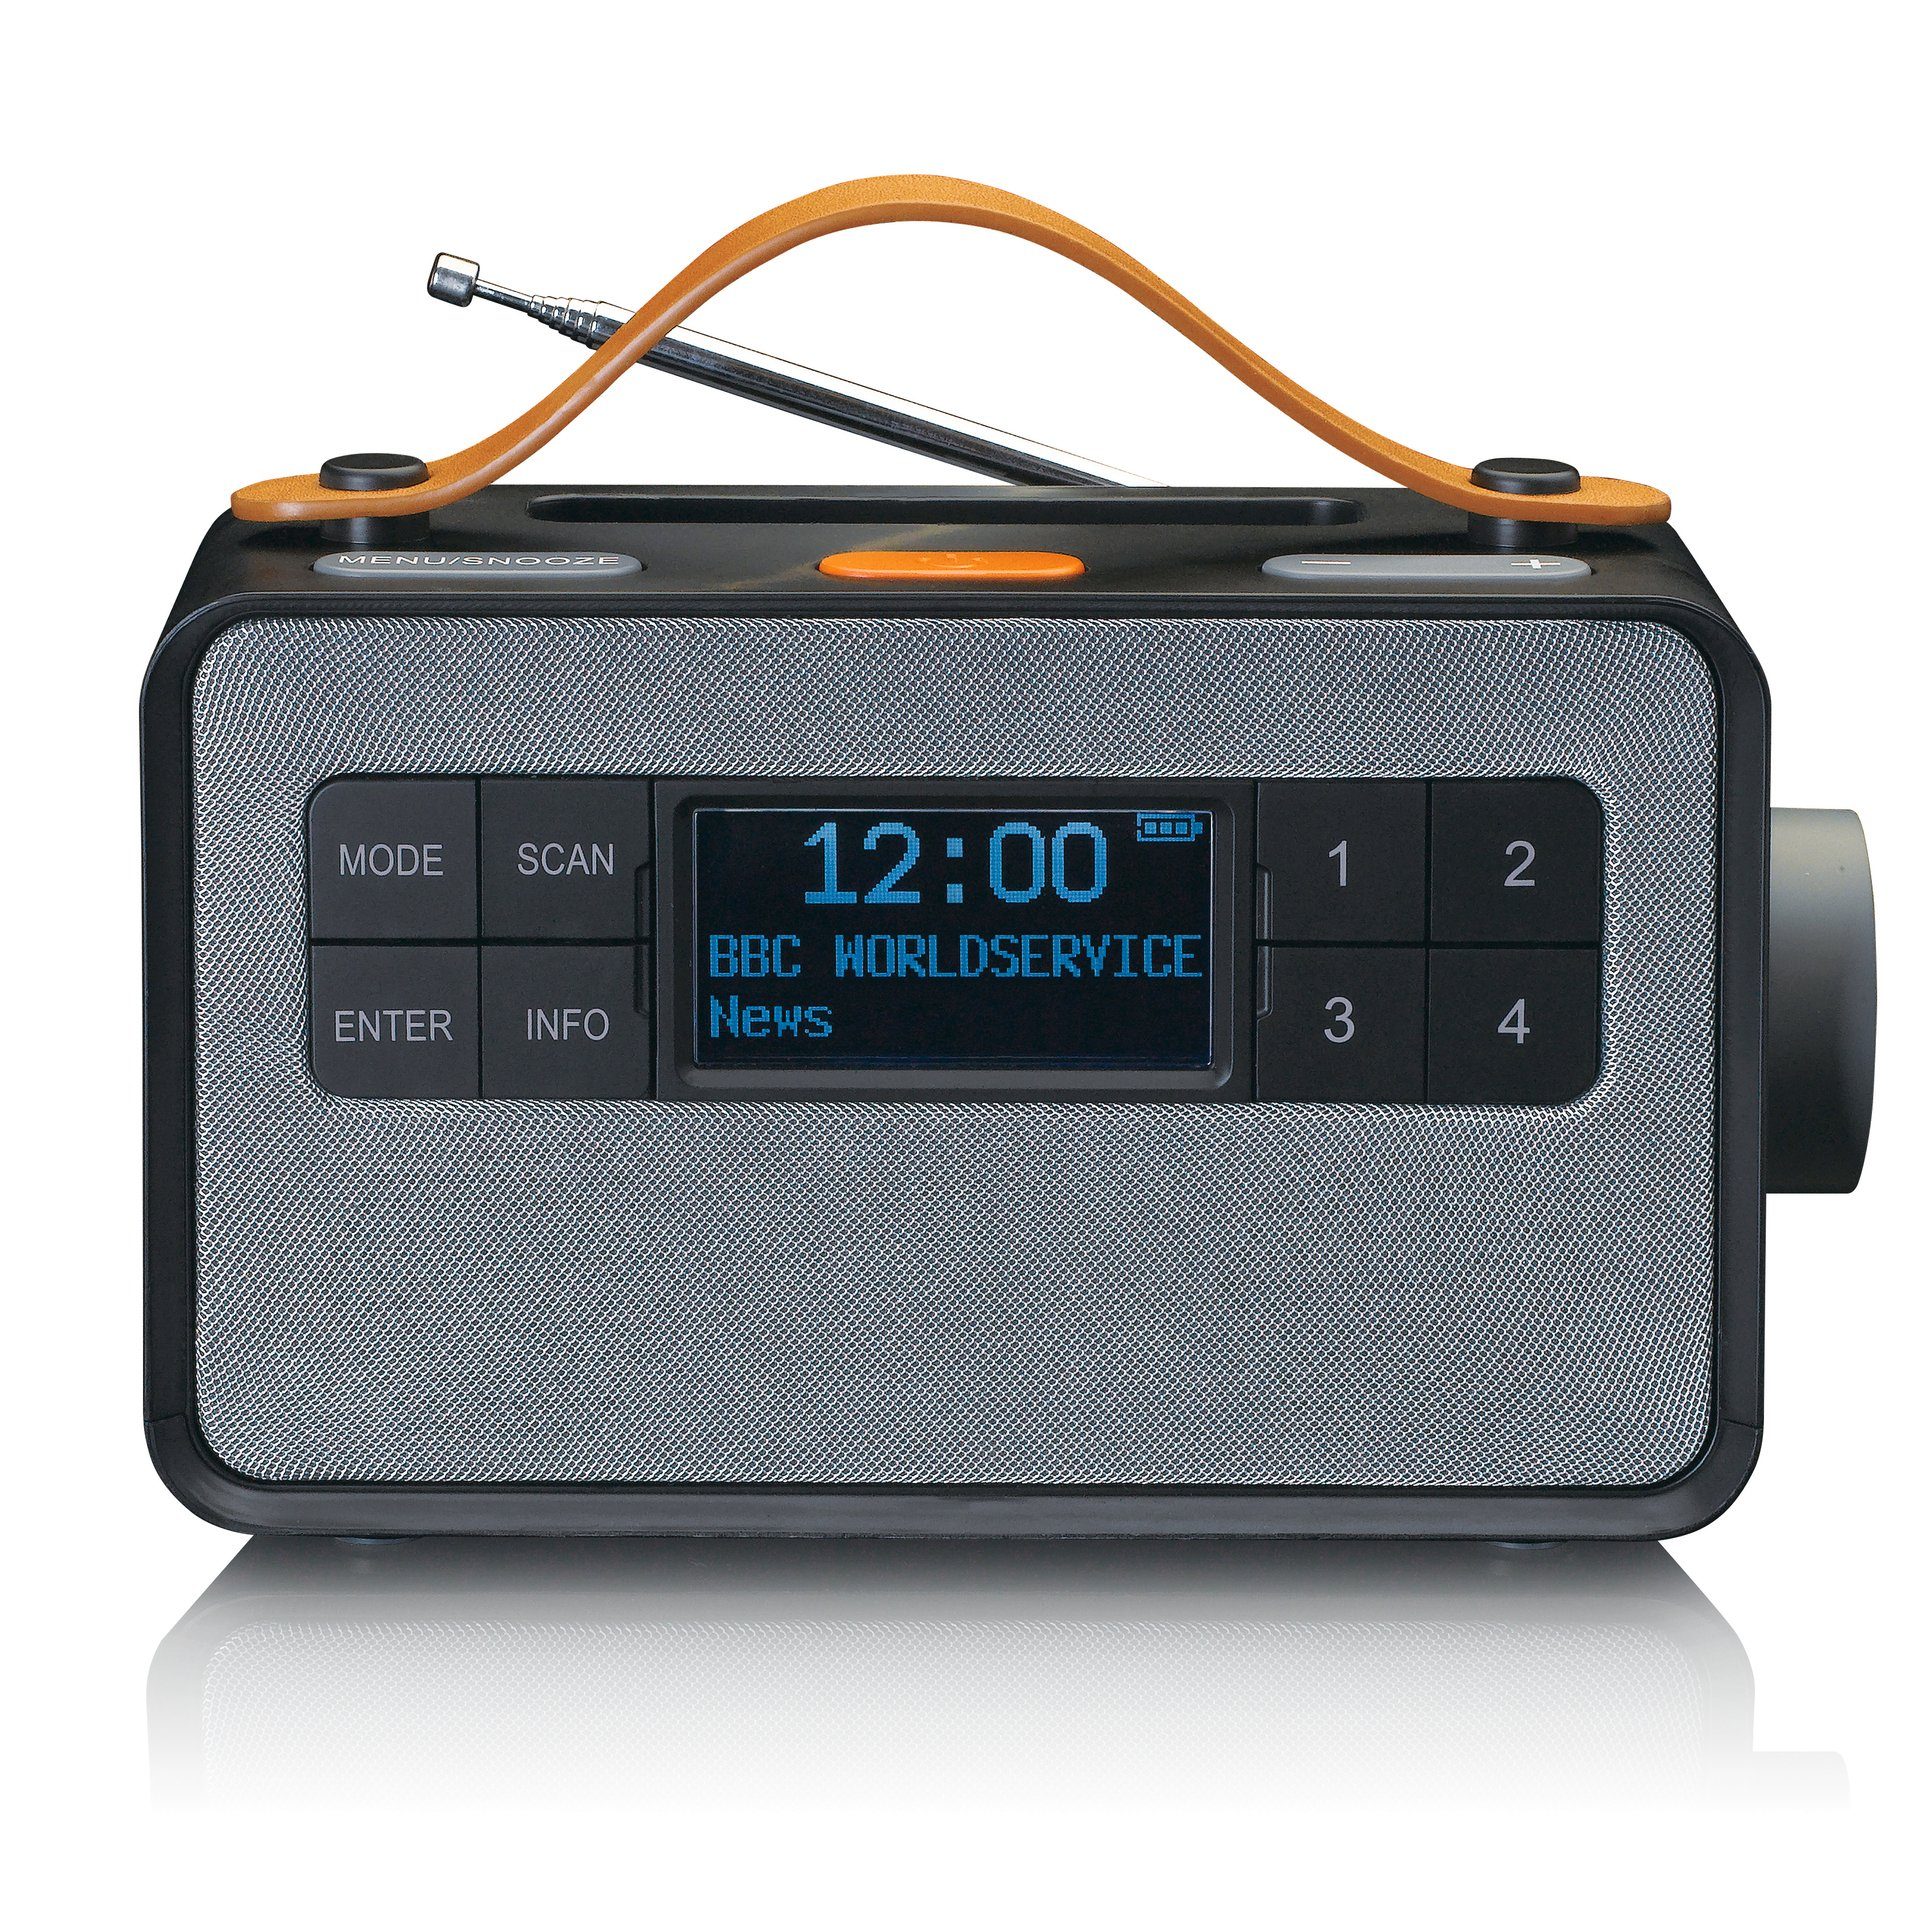 PDR-065 Digitalradio schwarz (DAB) Lenco